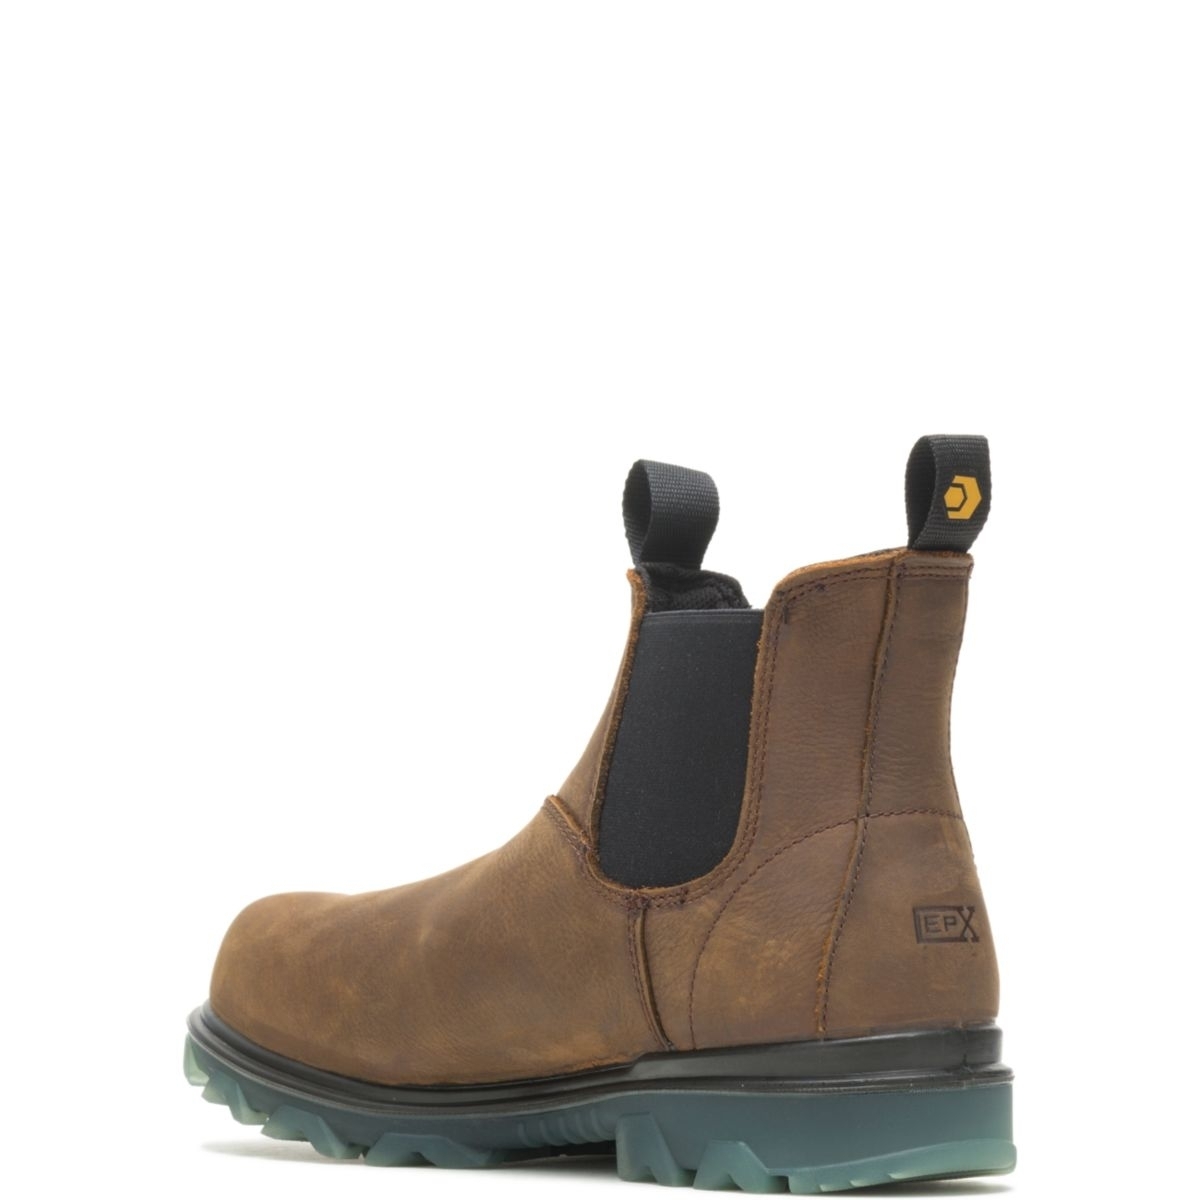 WOLVERINE Men's I-90 EPXÂ® Waterproof Soft Toe Romeo Pull On Work Boot Brown - W10790 - SUDAN BROWN, 7.5 X-Wide